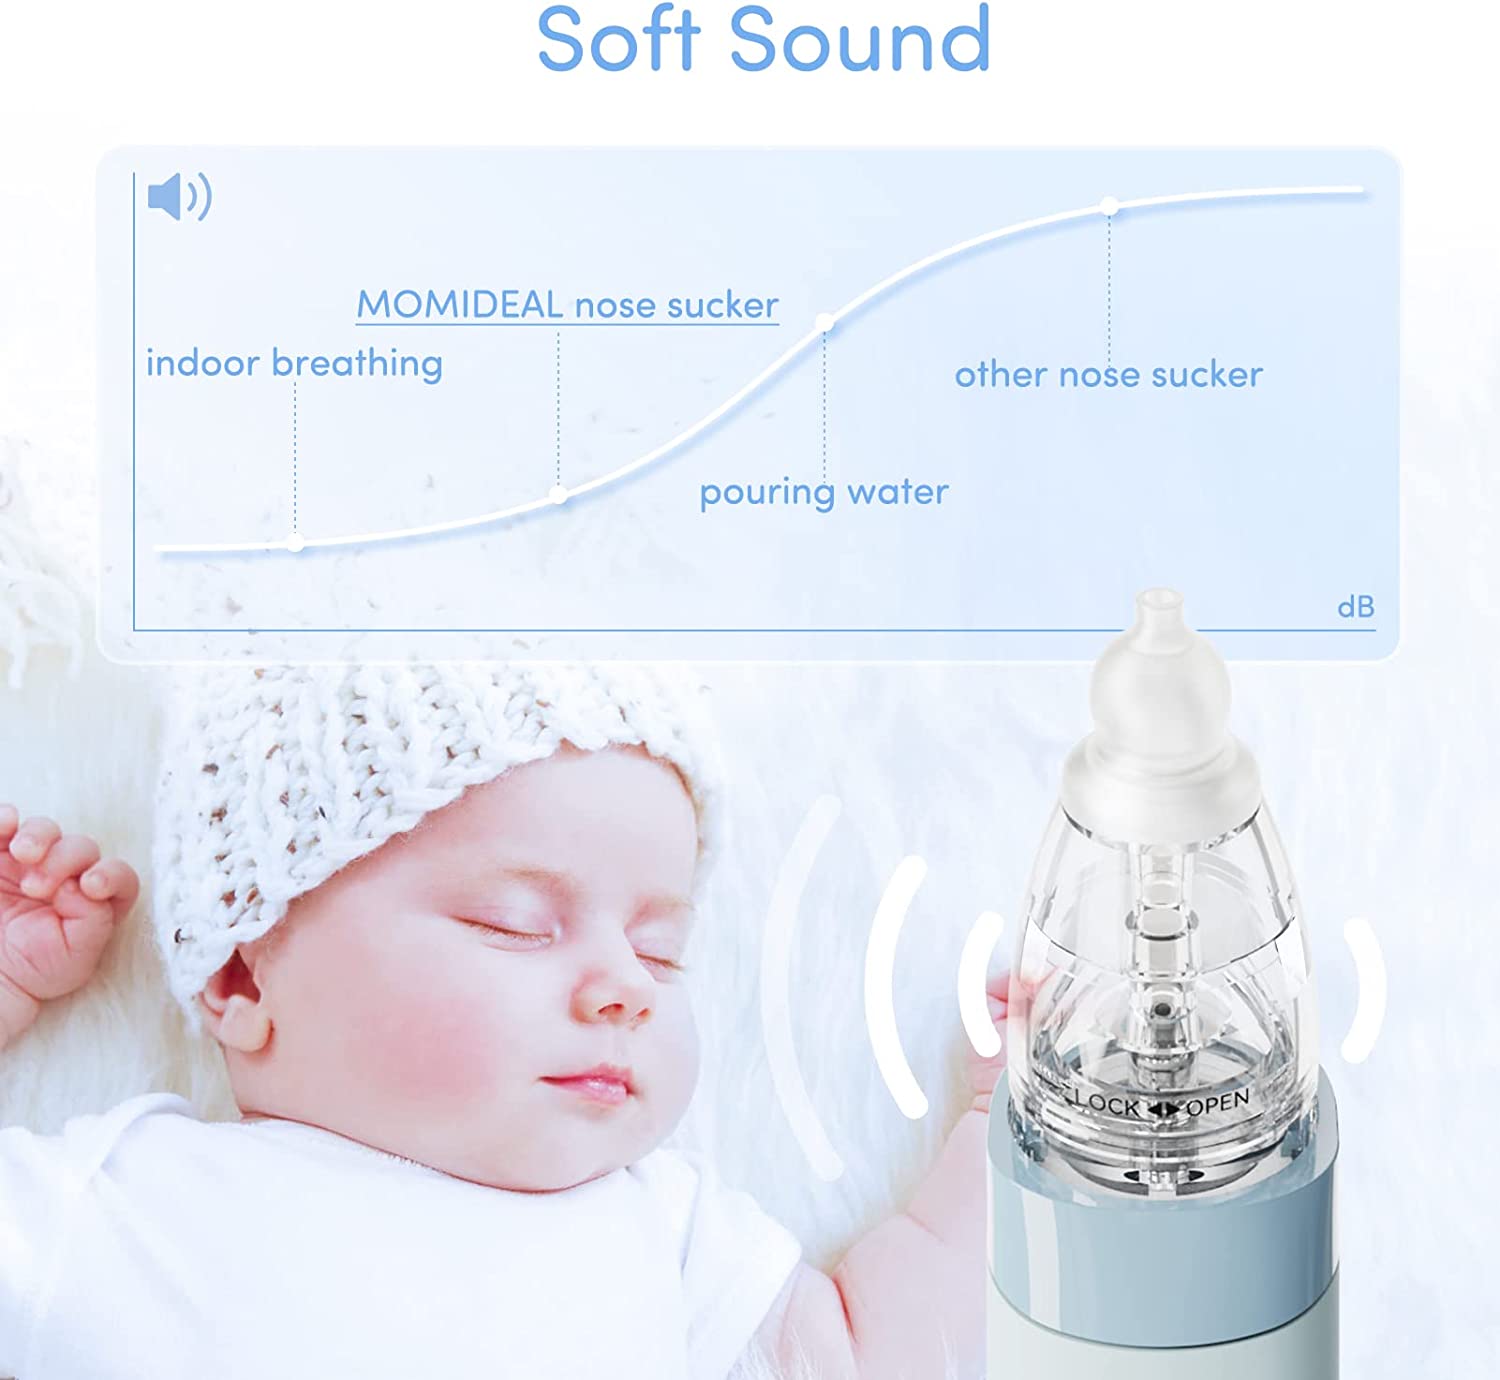  Nasal Aspirator for Baby, Electric Baby Nose Sucker